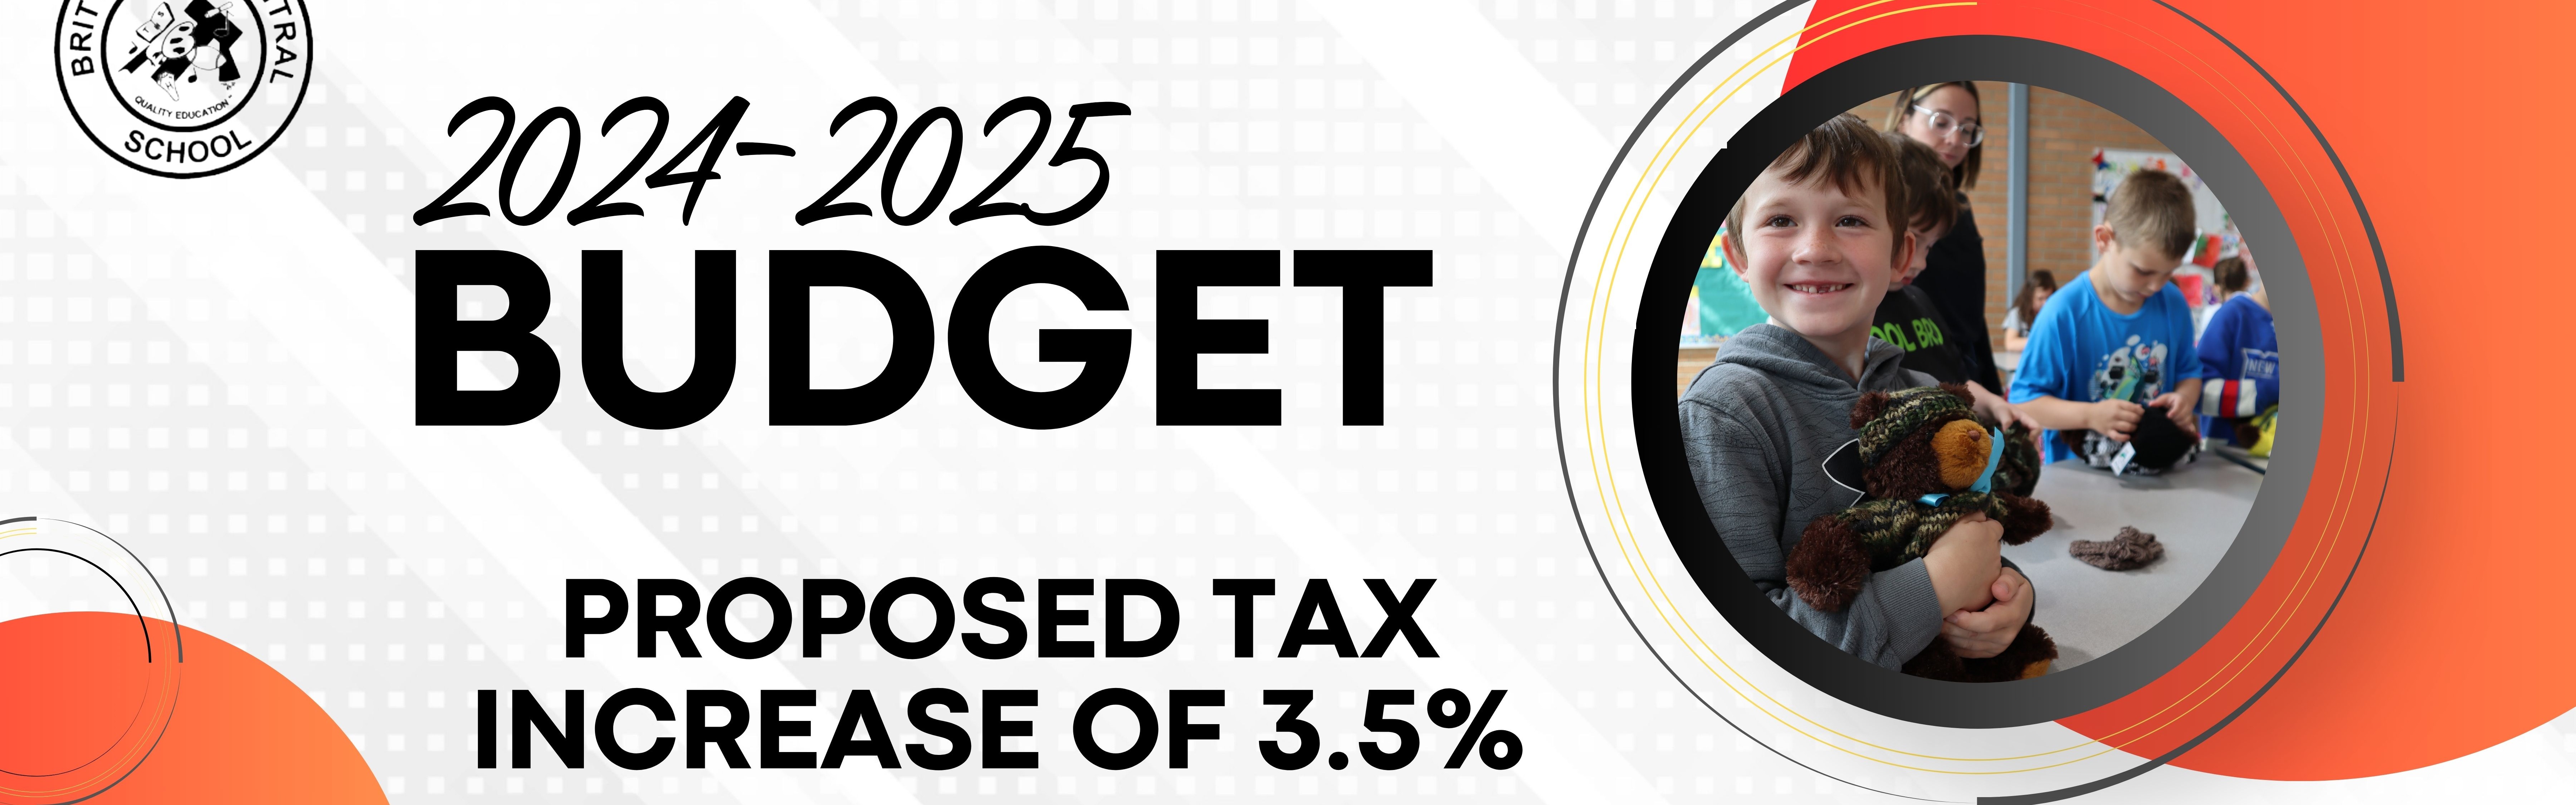 Tax Increase Budget